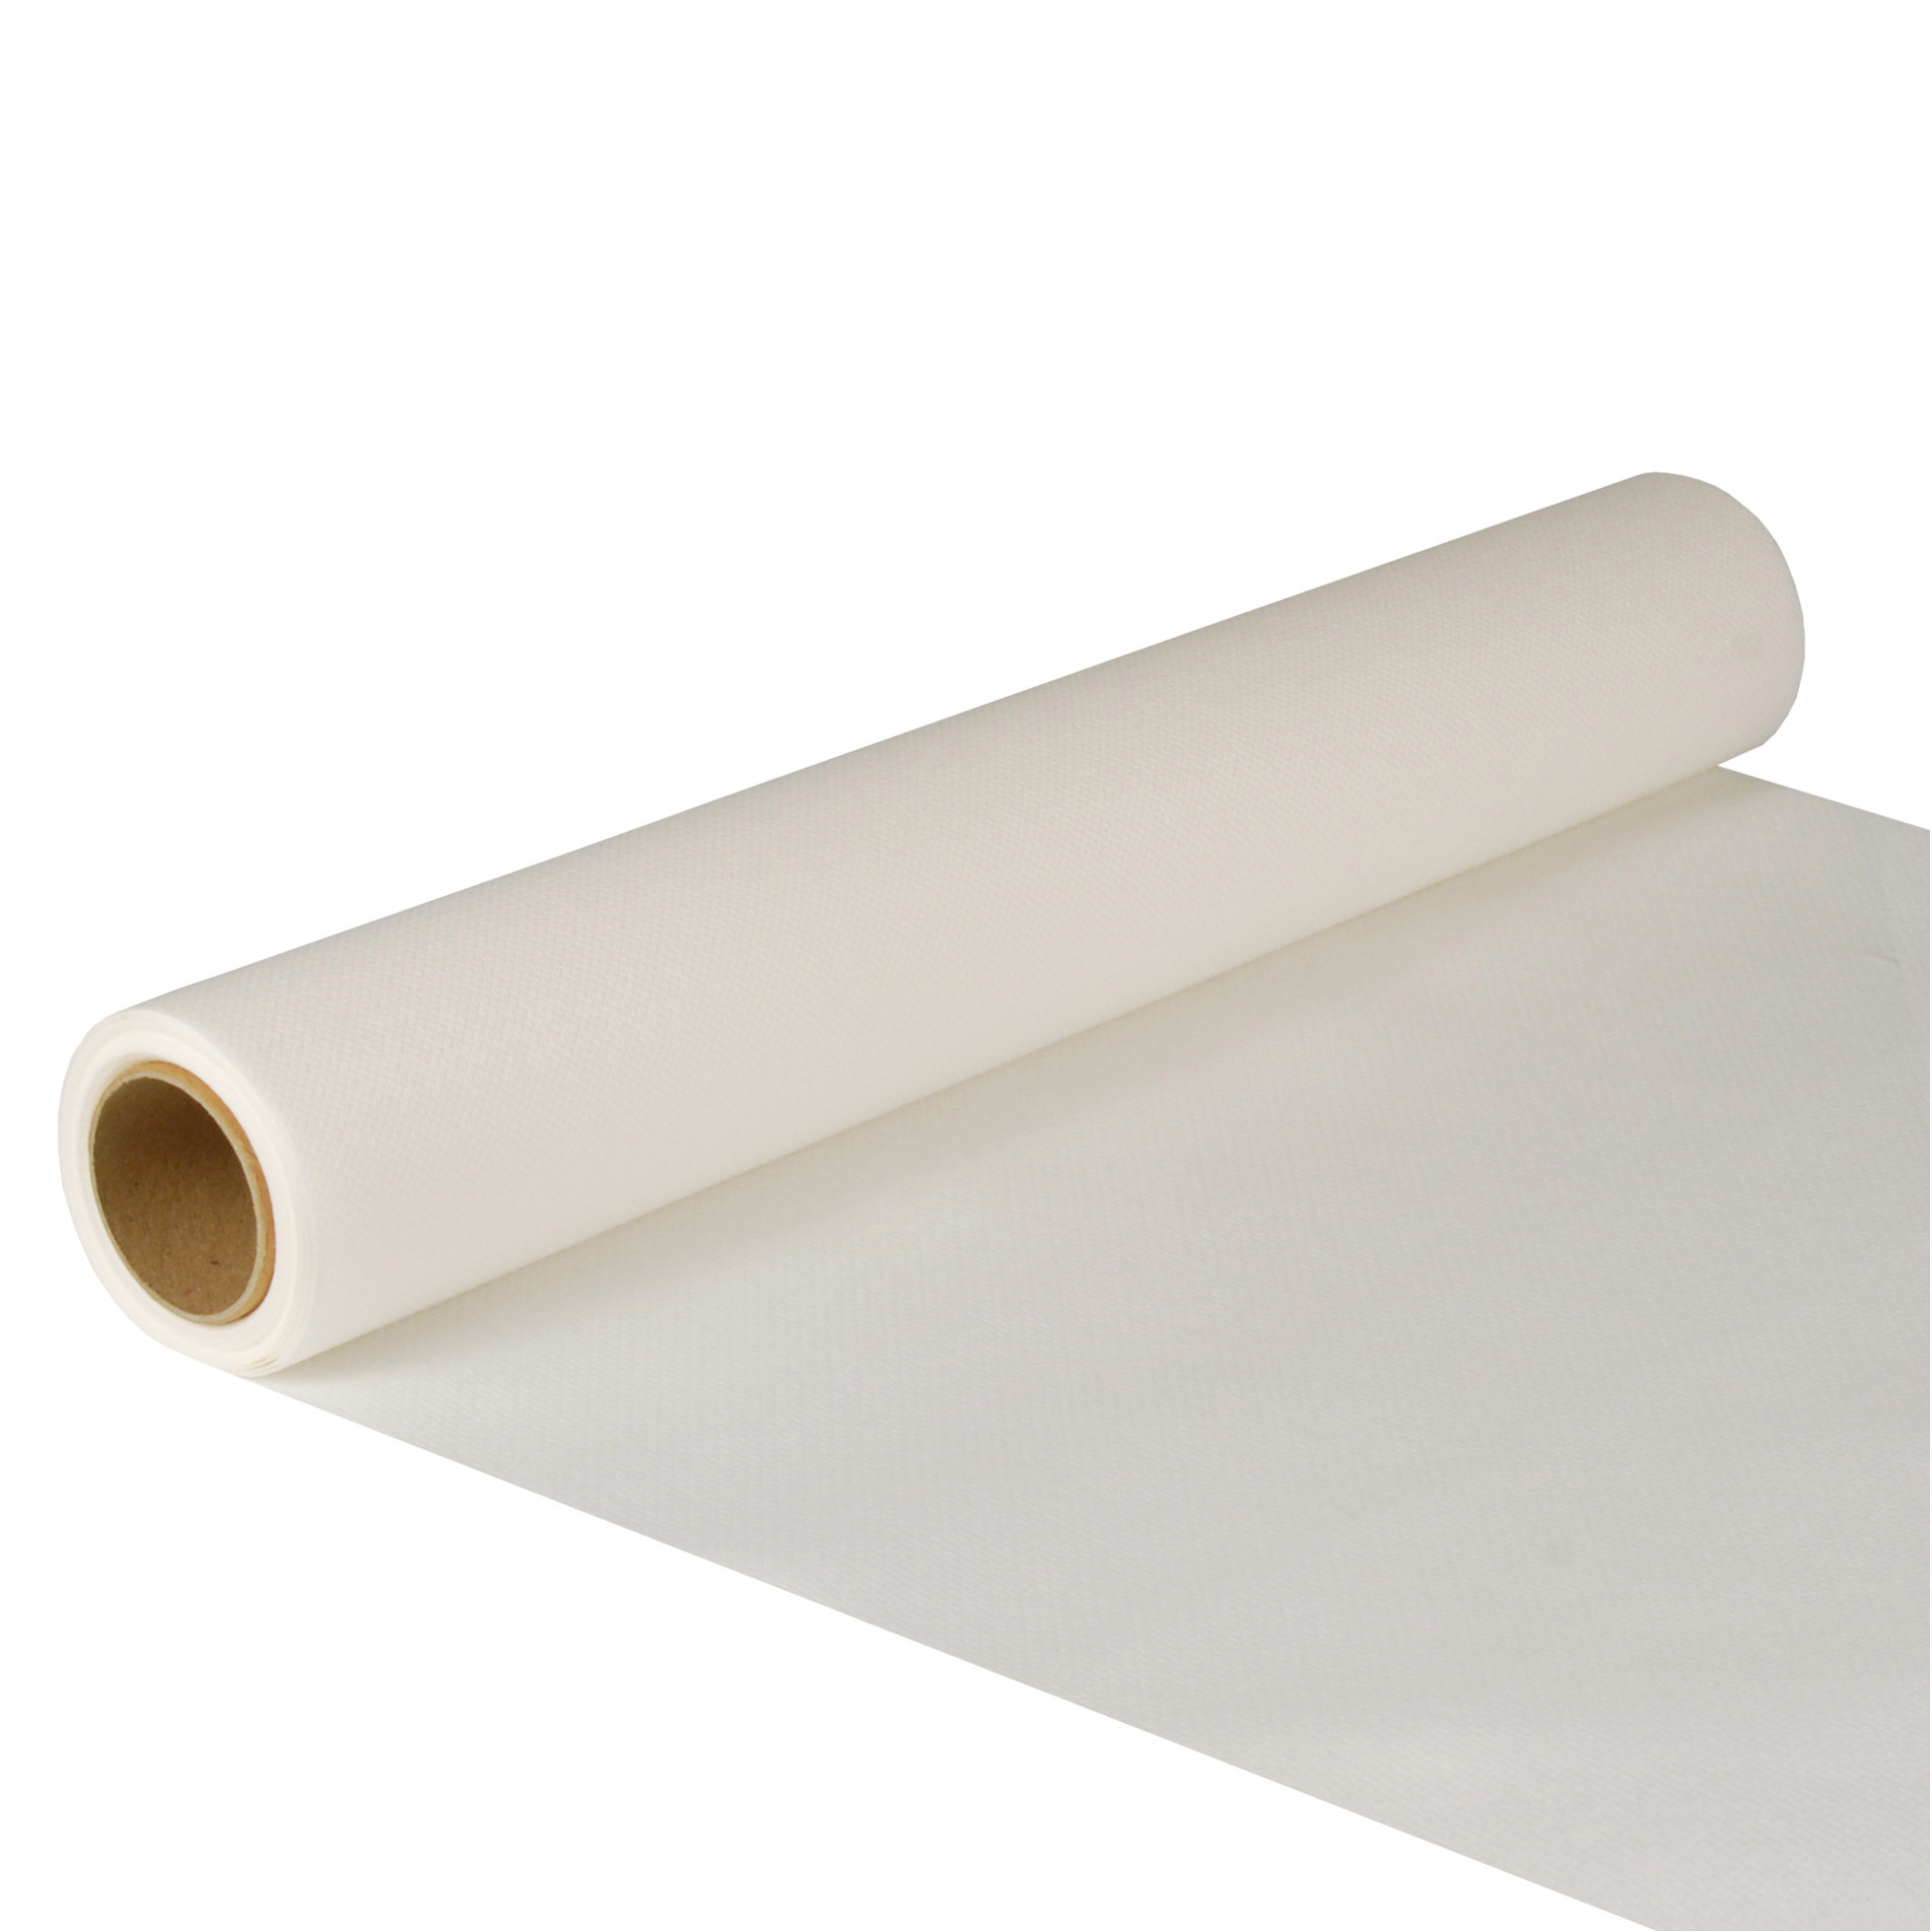 Tafelloper wit 500 x 40 cm papier luxe tafellopers